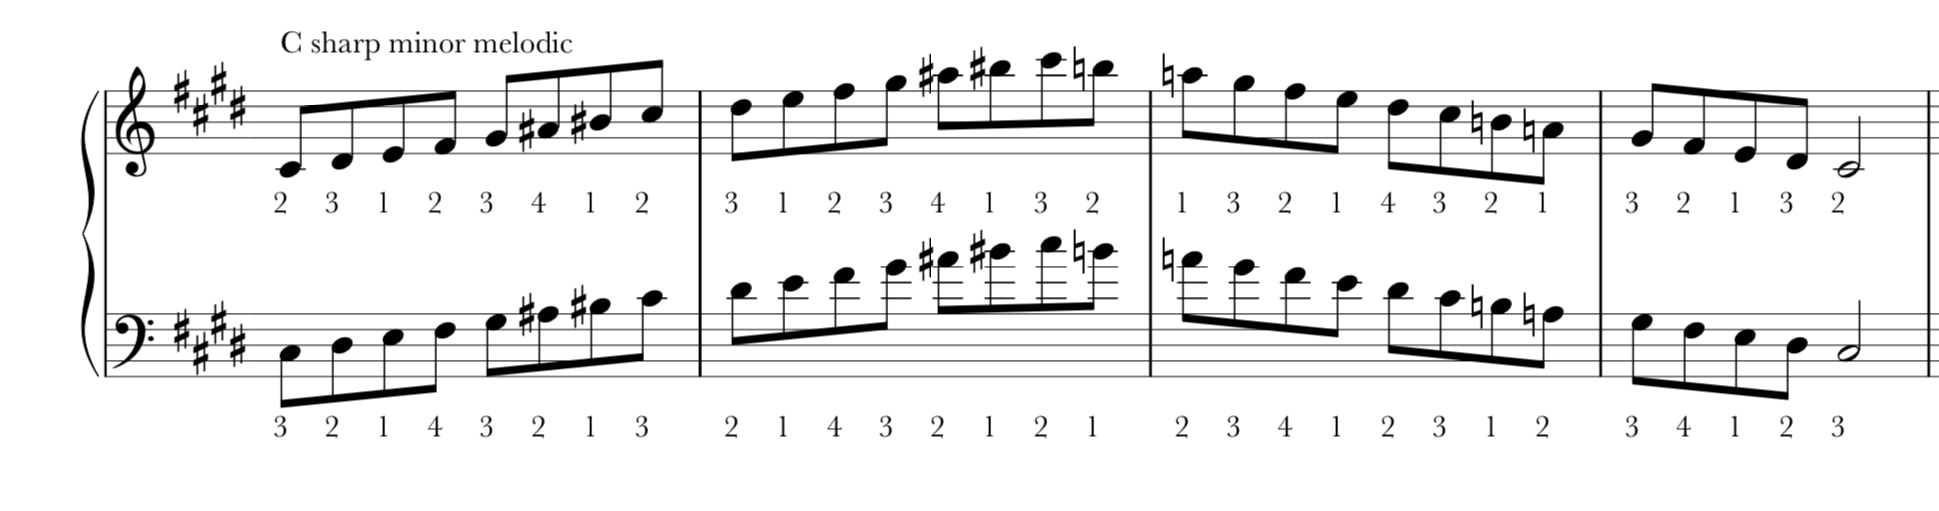 c harmonic minor scale bass clef